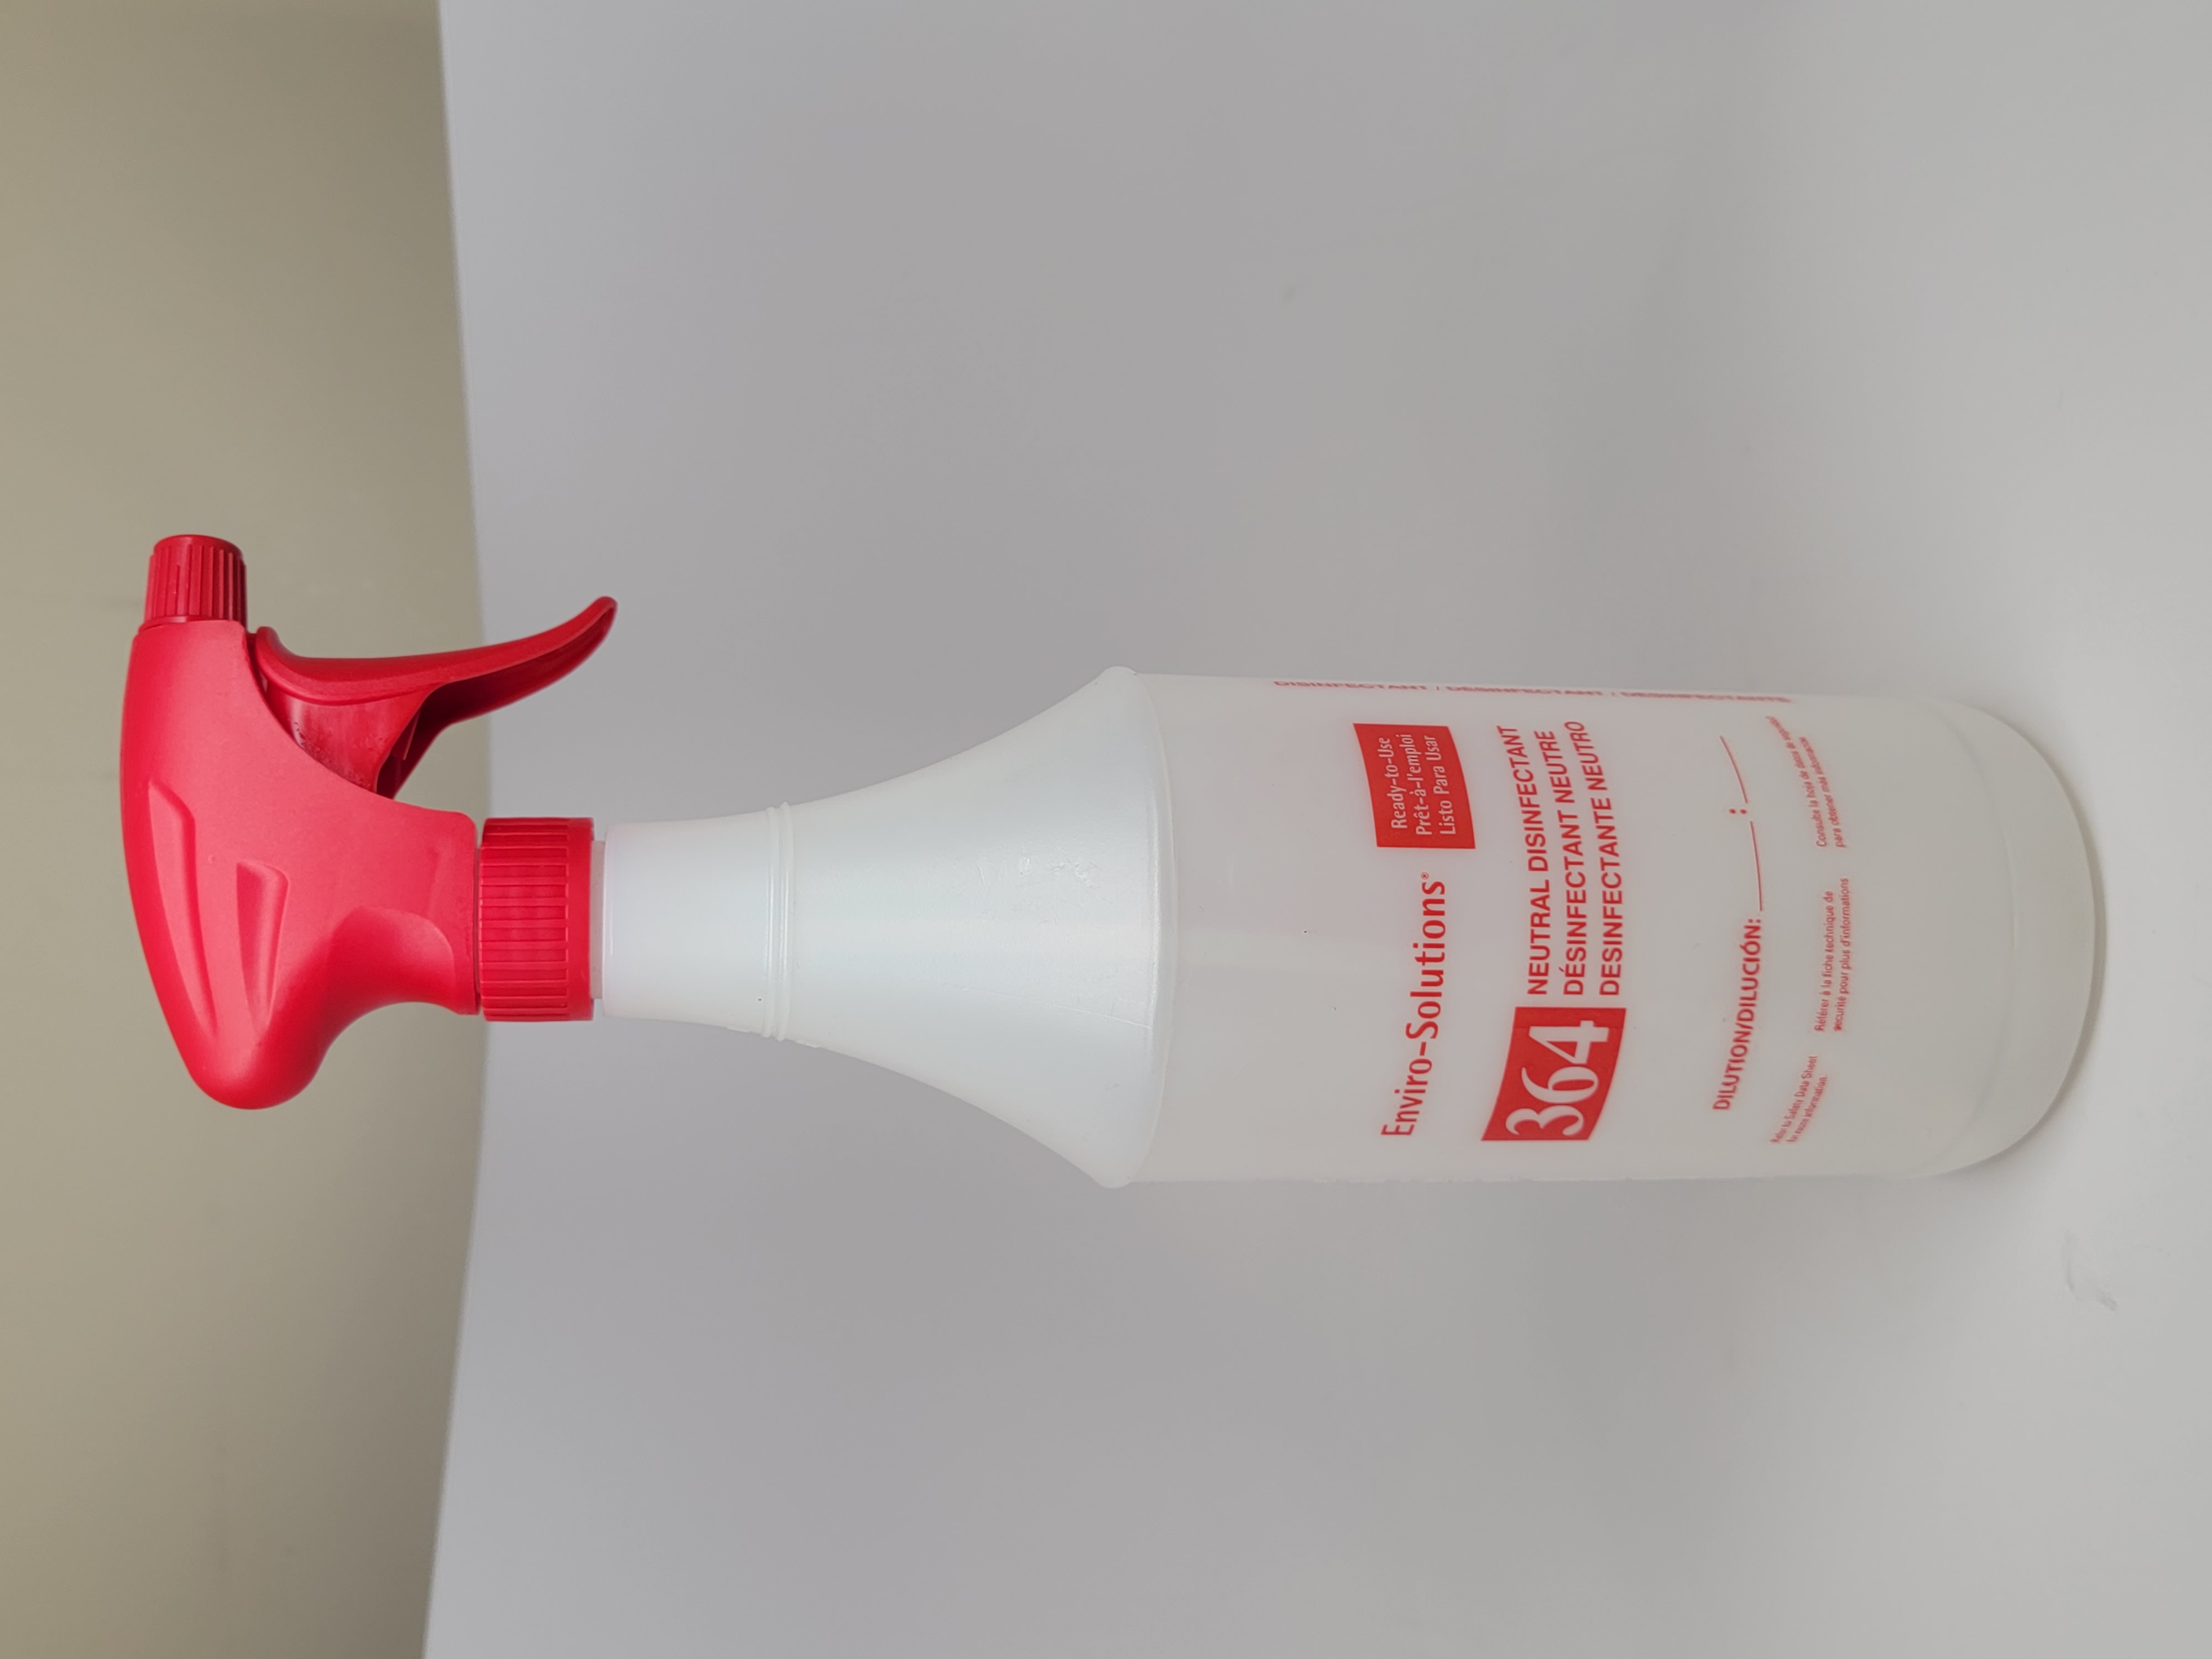 Puroxcide Puresan Puroxicide Heavy Duty Spray Bottle & Trigger Sprayer 32  FLOZ Plastic Red 6/Case